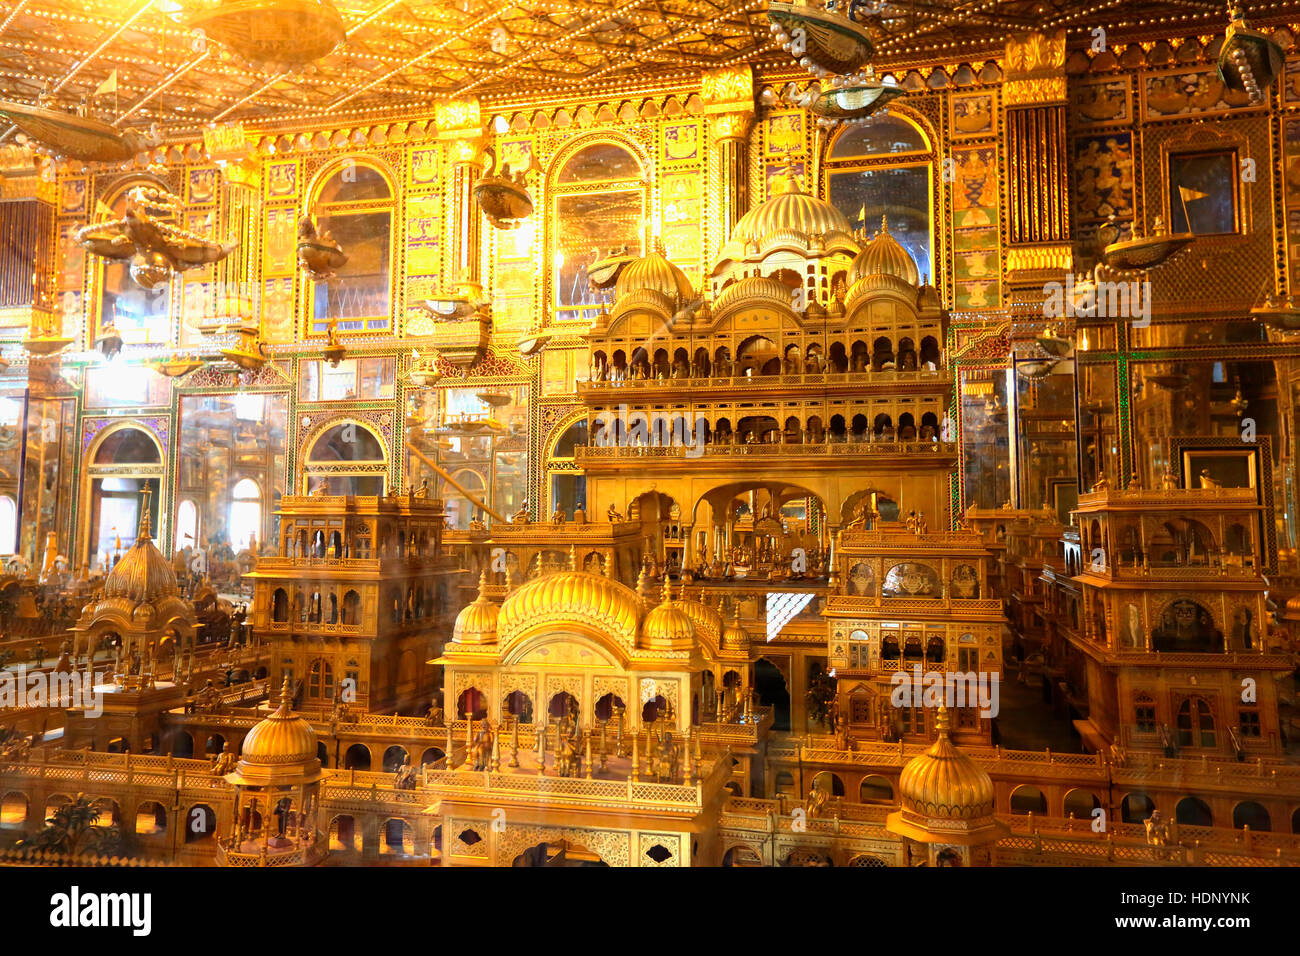 Inside View of Soni Ji Ki Nasiyan. The main chamber, known as the Swarna Nagari City of Gold, has several gold-plated wooden figures, depicting severa Stock Photo